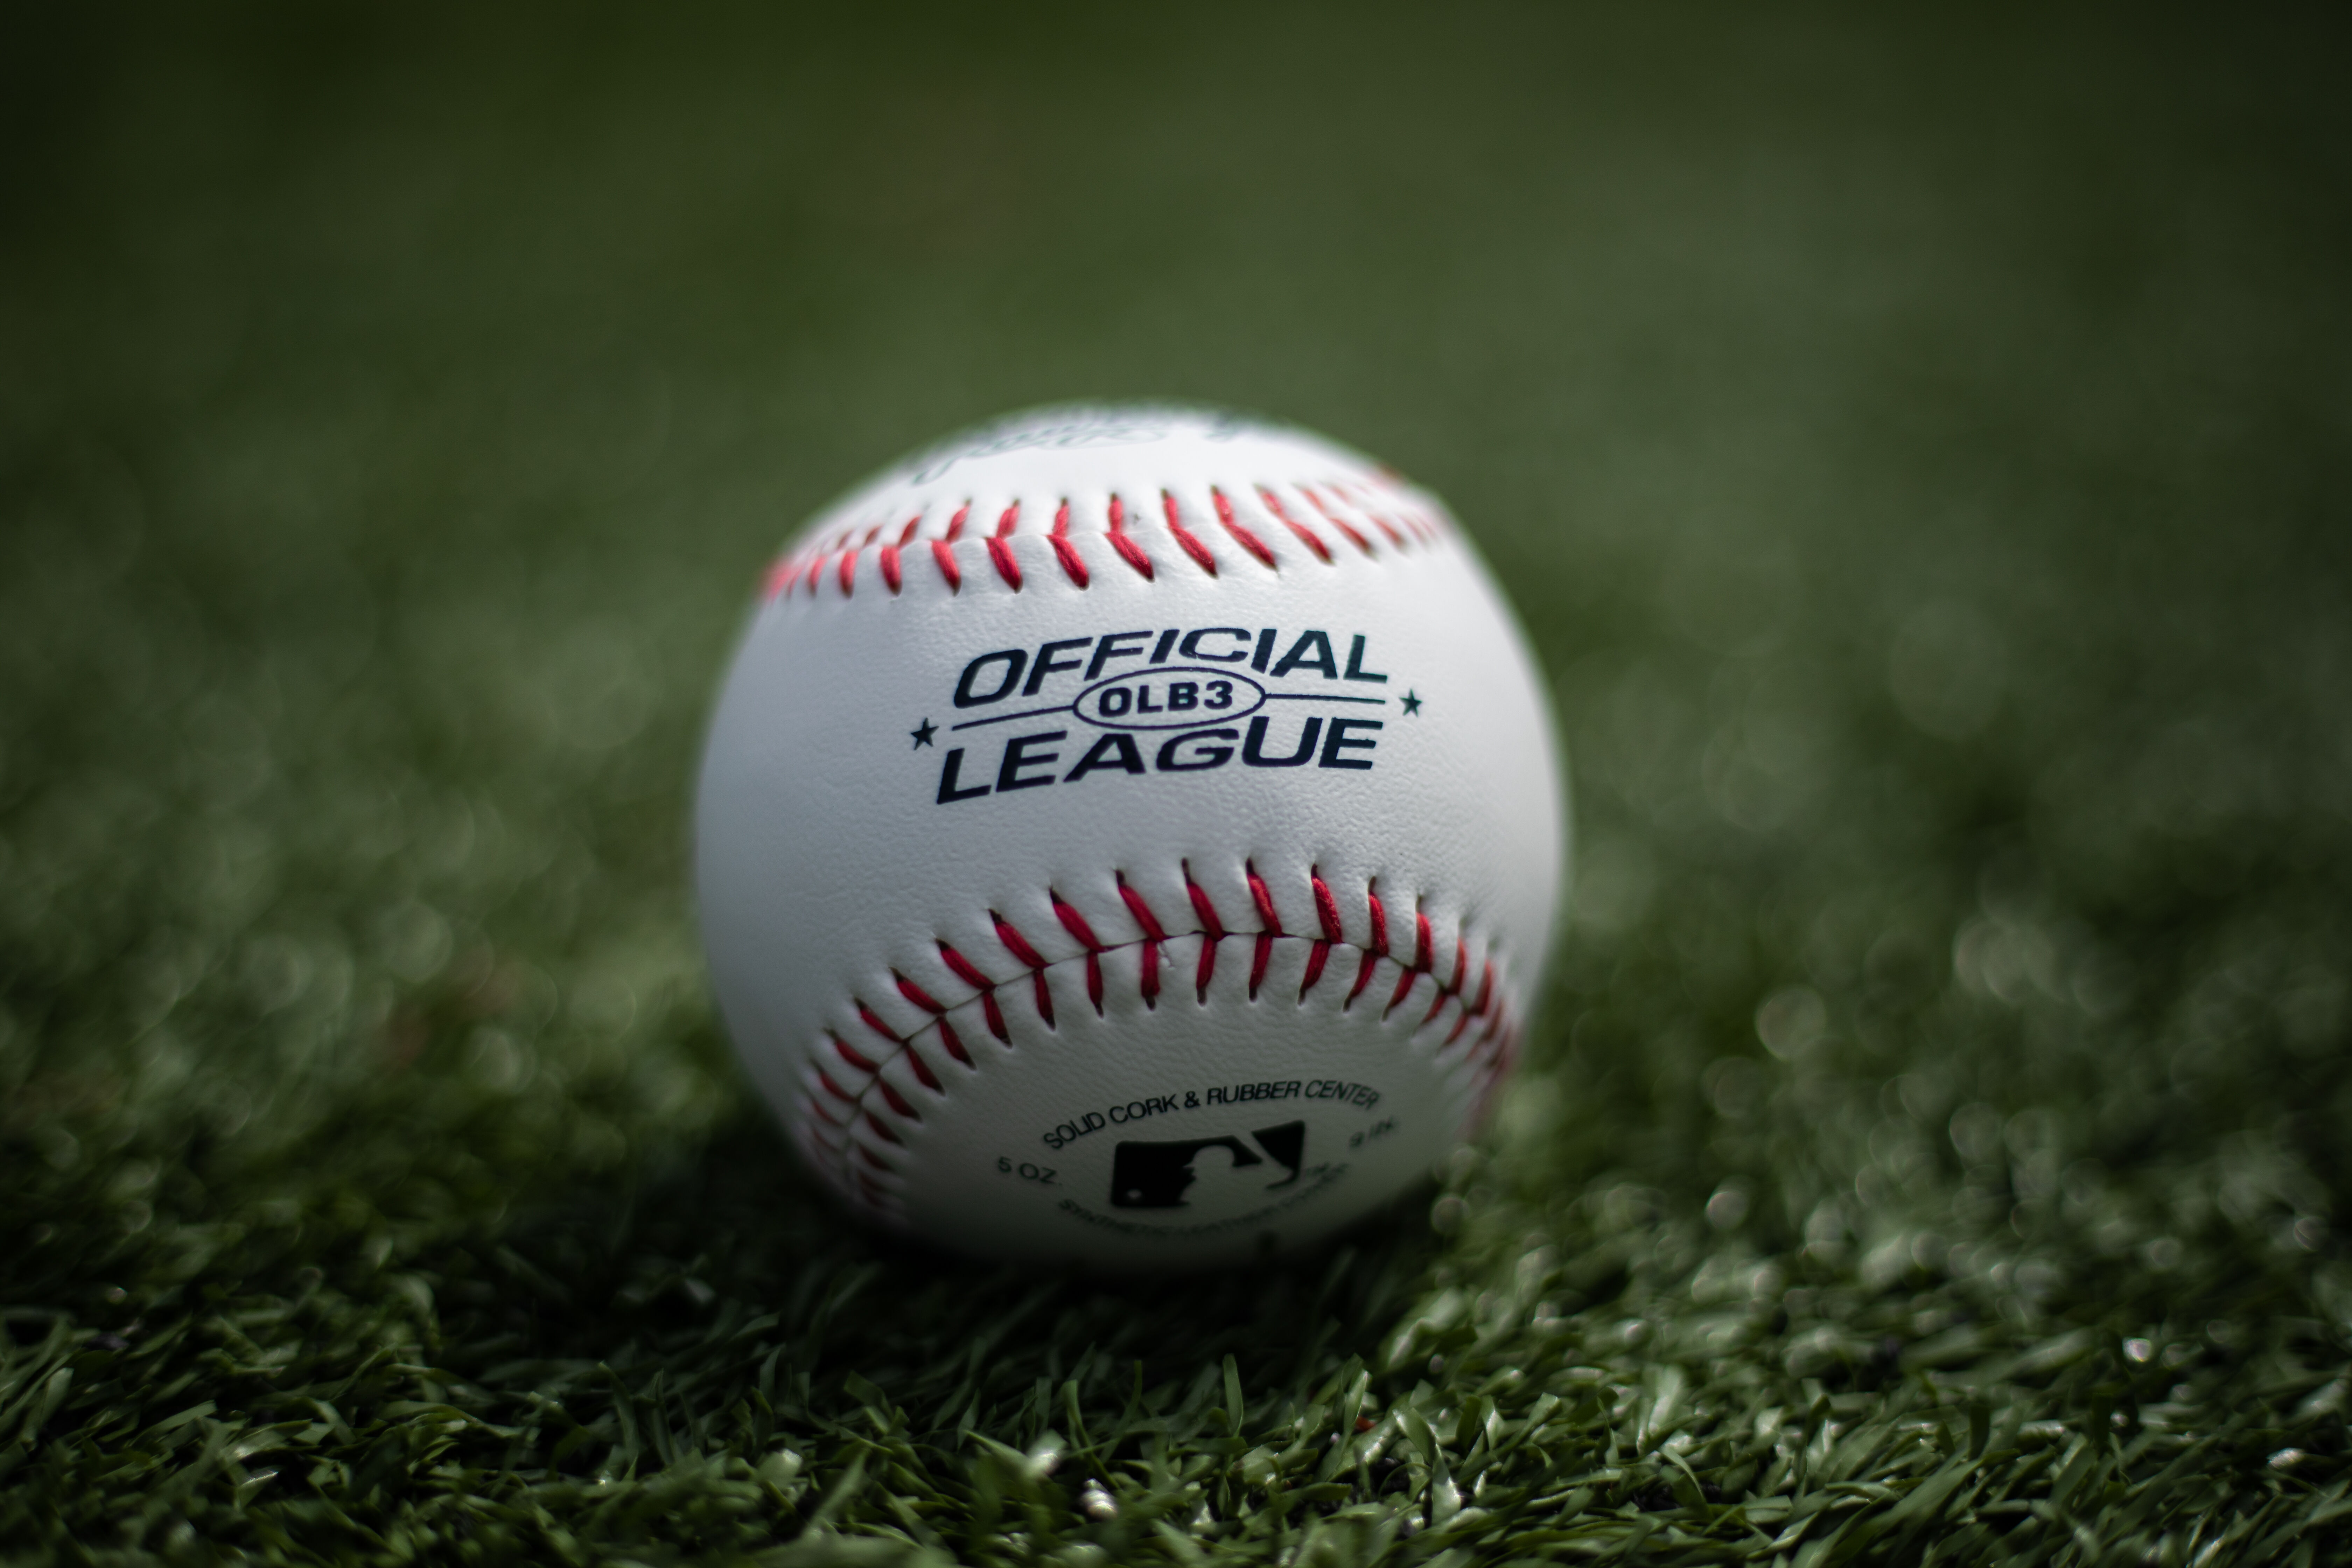 OLB3BAG12 Rawlings Official League Recreational Use Baseballs Bag of 12 Renewed 